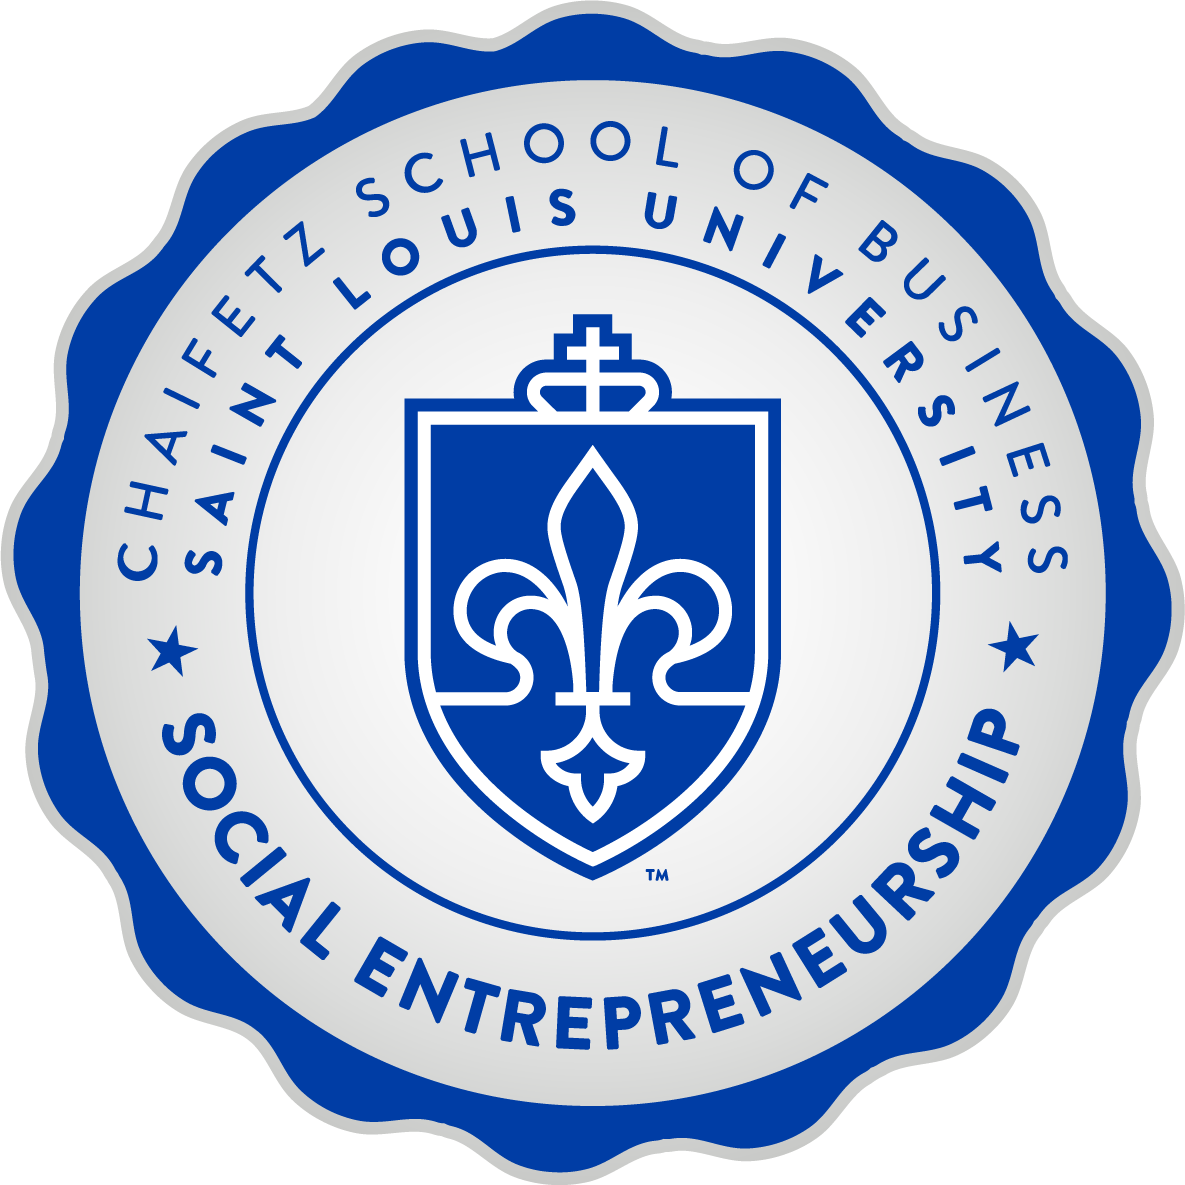 Social Entrepreneurship Digital Badge Reading "Chaifetz School of Business Saint Louis University - Social Entrepreneurship"